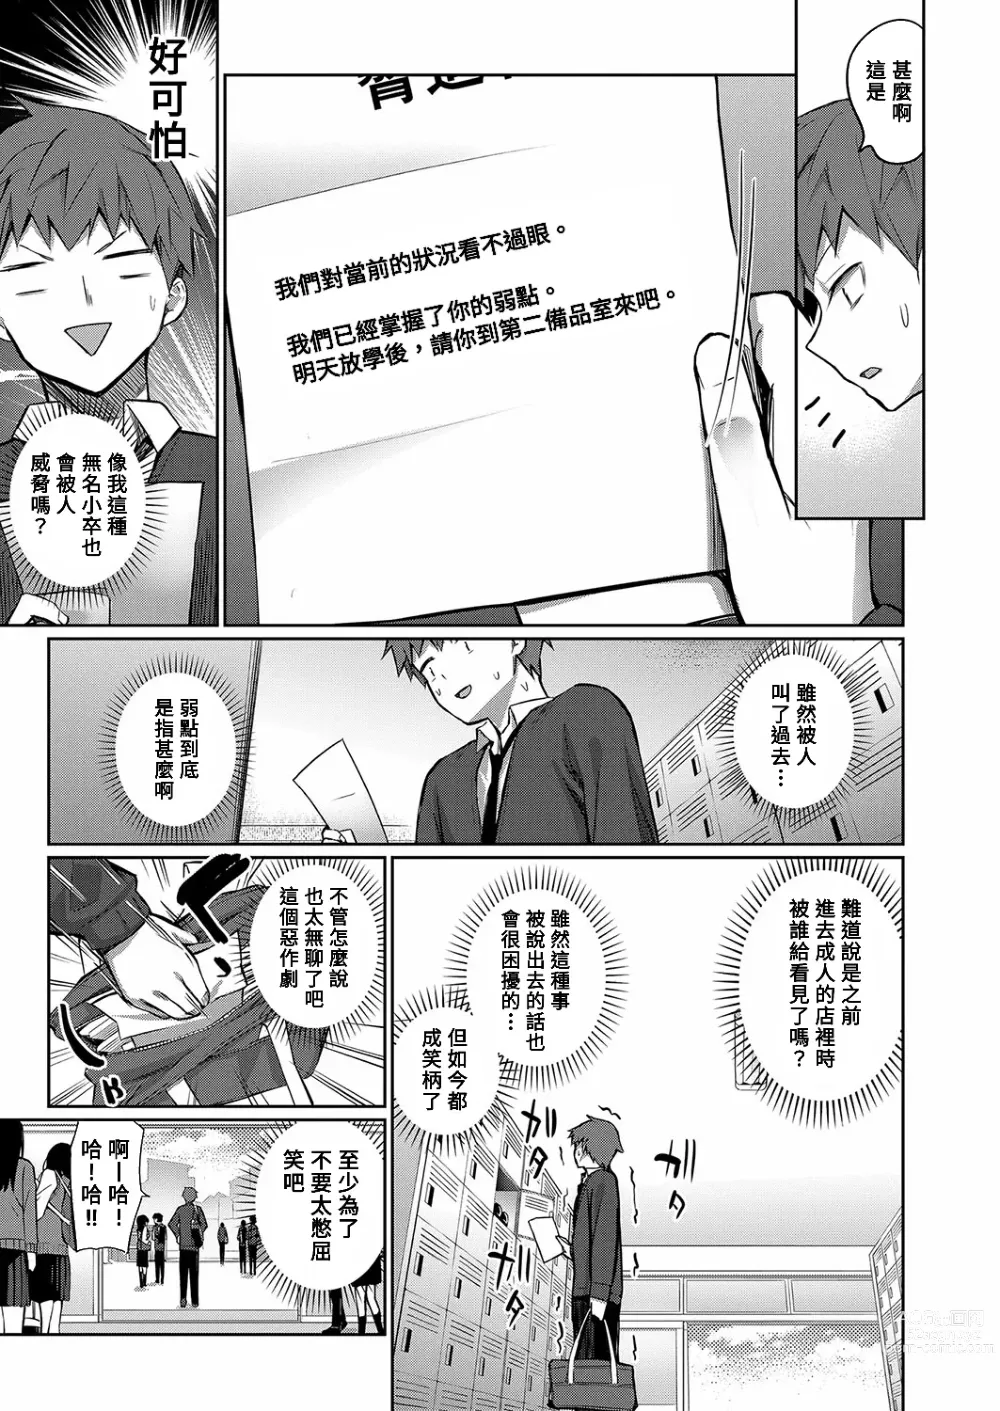 Page 5 of manga Tasukete! Jimiko ni Okasaremasu!